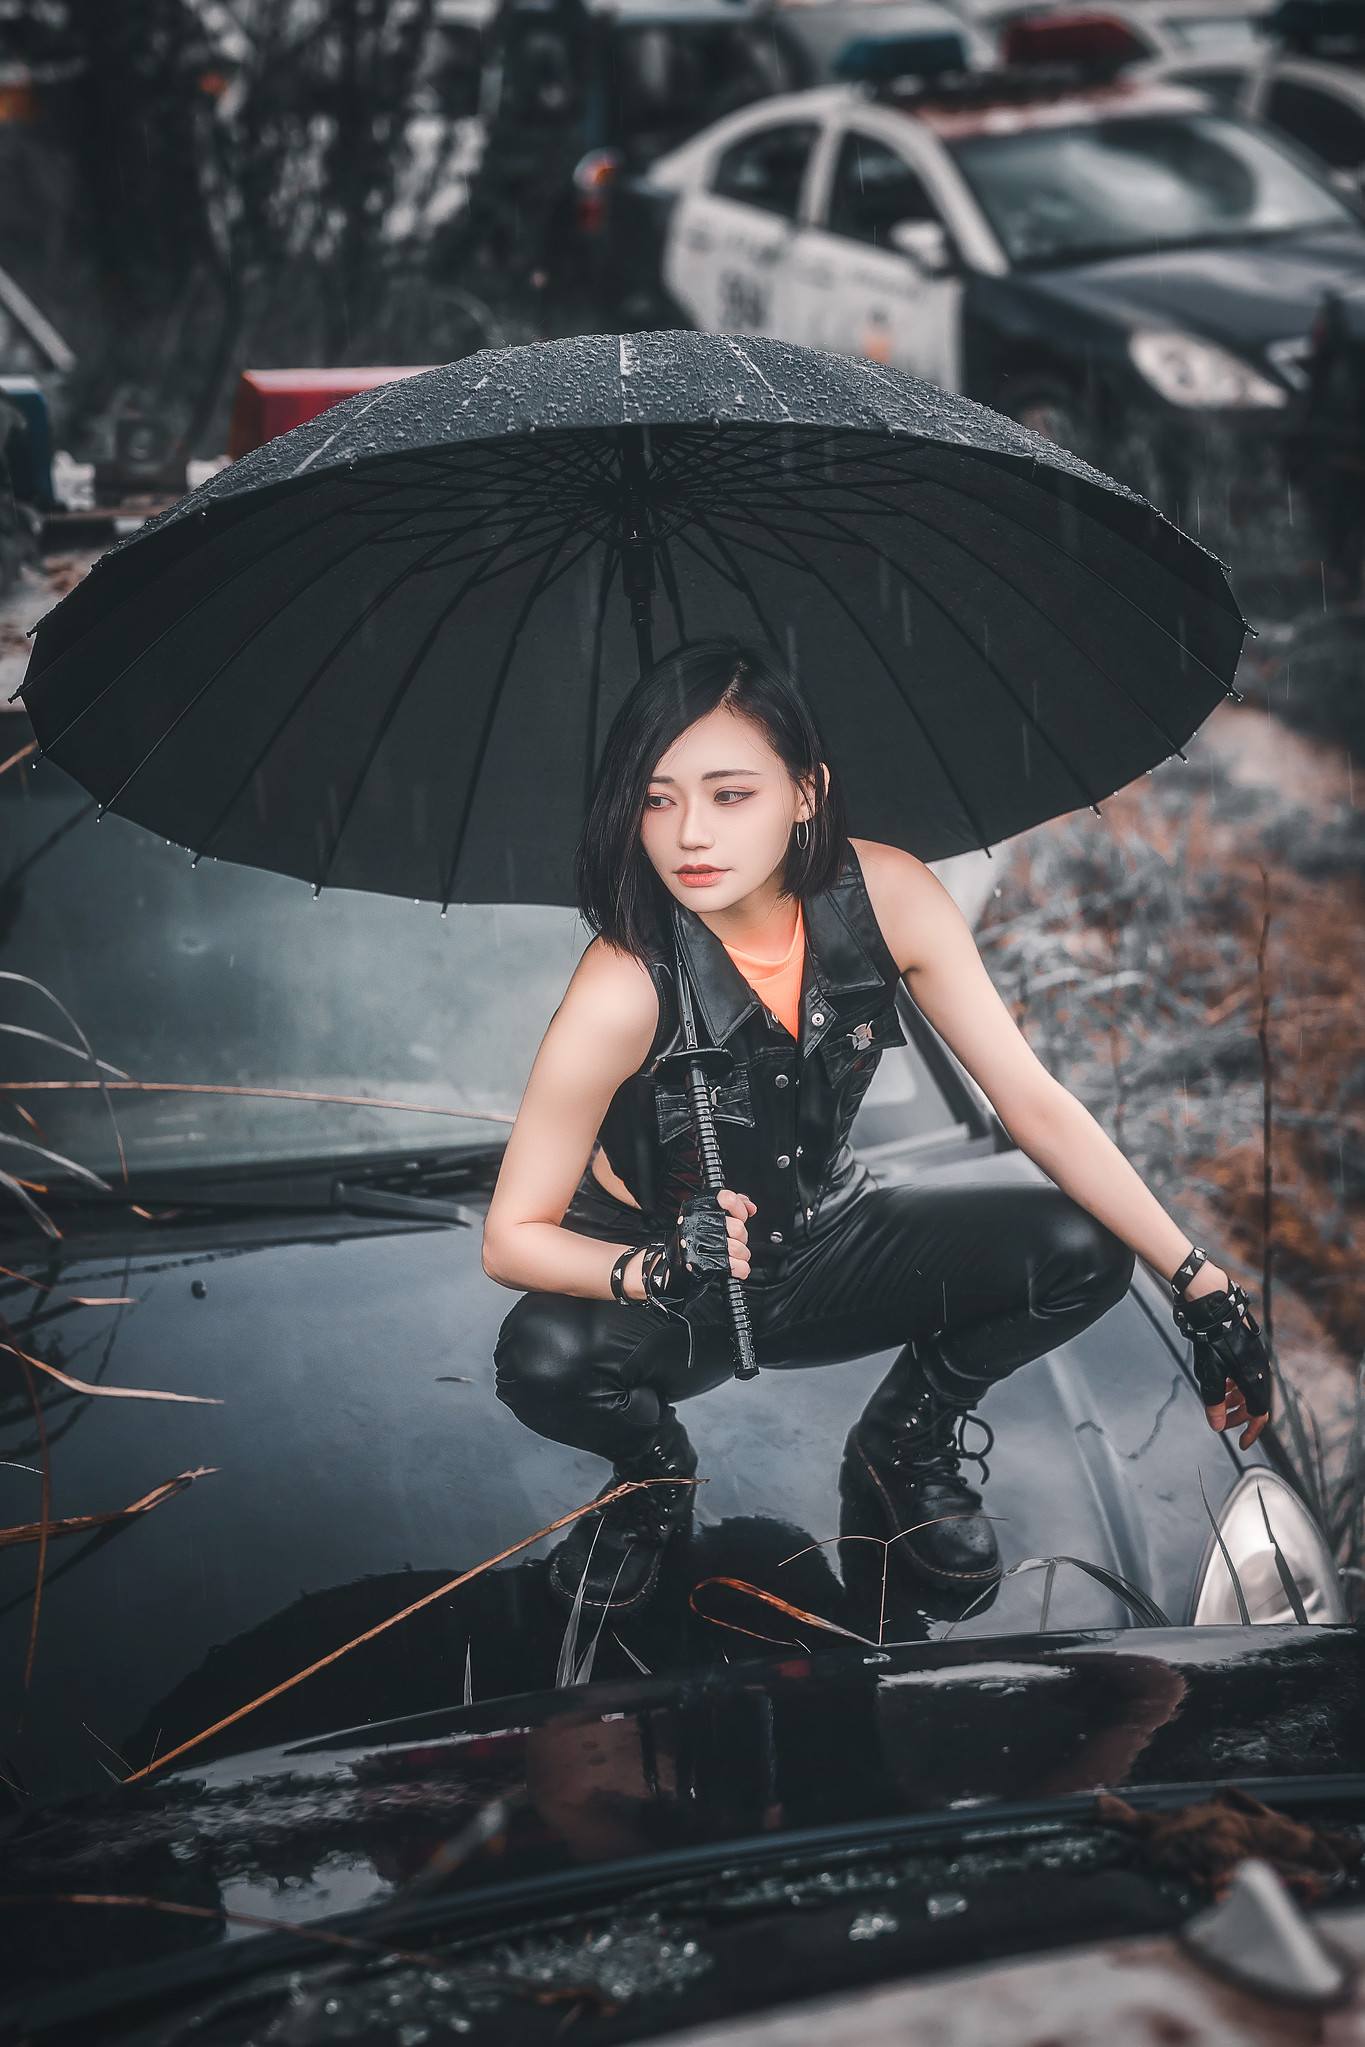 Asian Women Model Junkyard Umbrella Women With Umbrella Car Vehicle Car Wreck Black Hair Red Lipstic 1365x2047